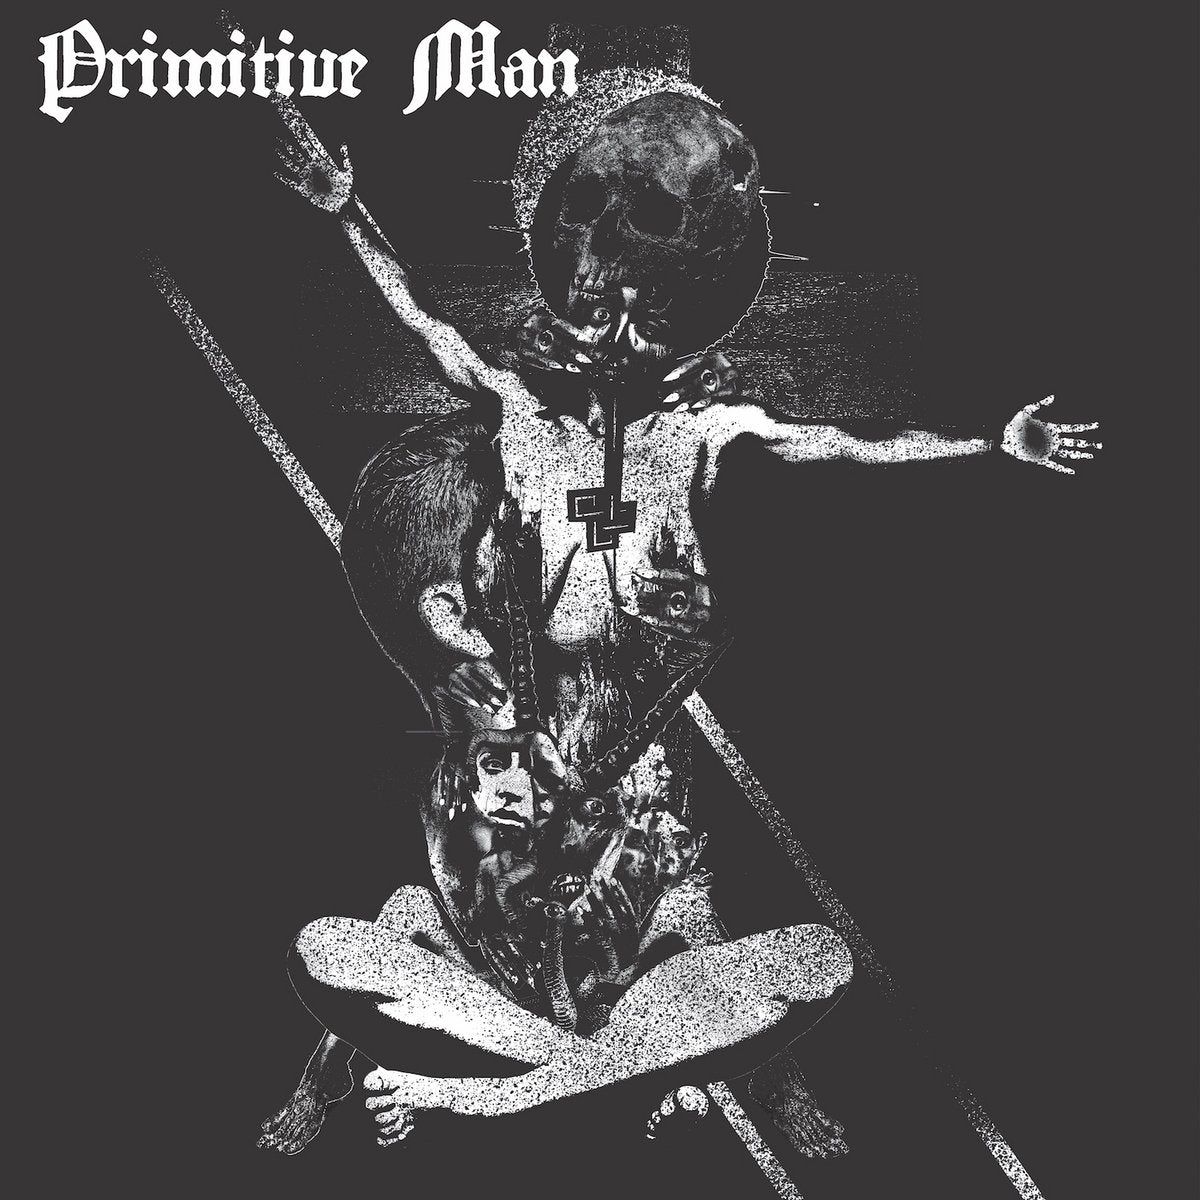 Primitive Man "Insurmountable" 12" Vinyl